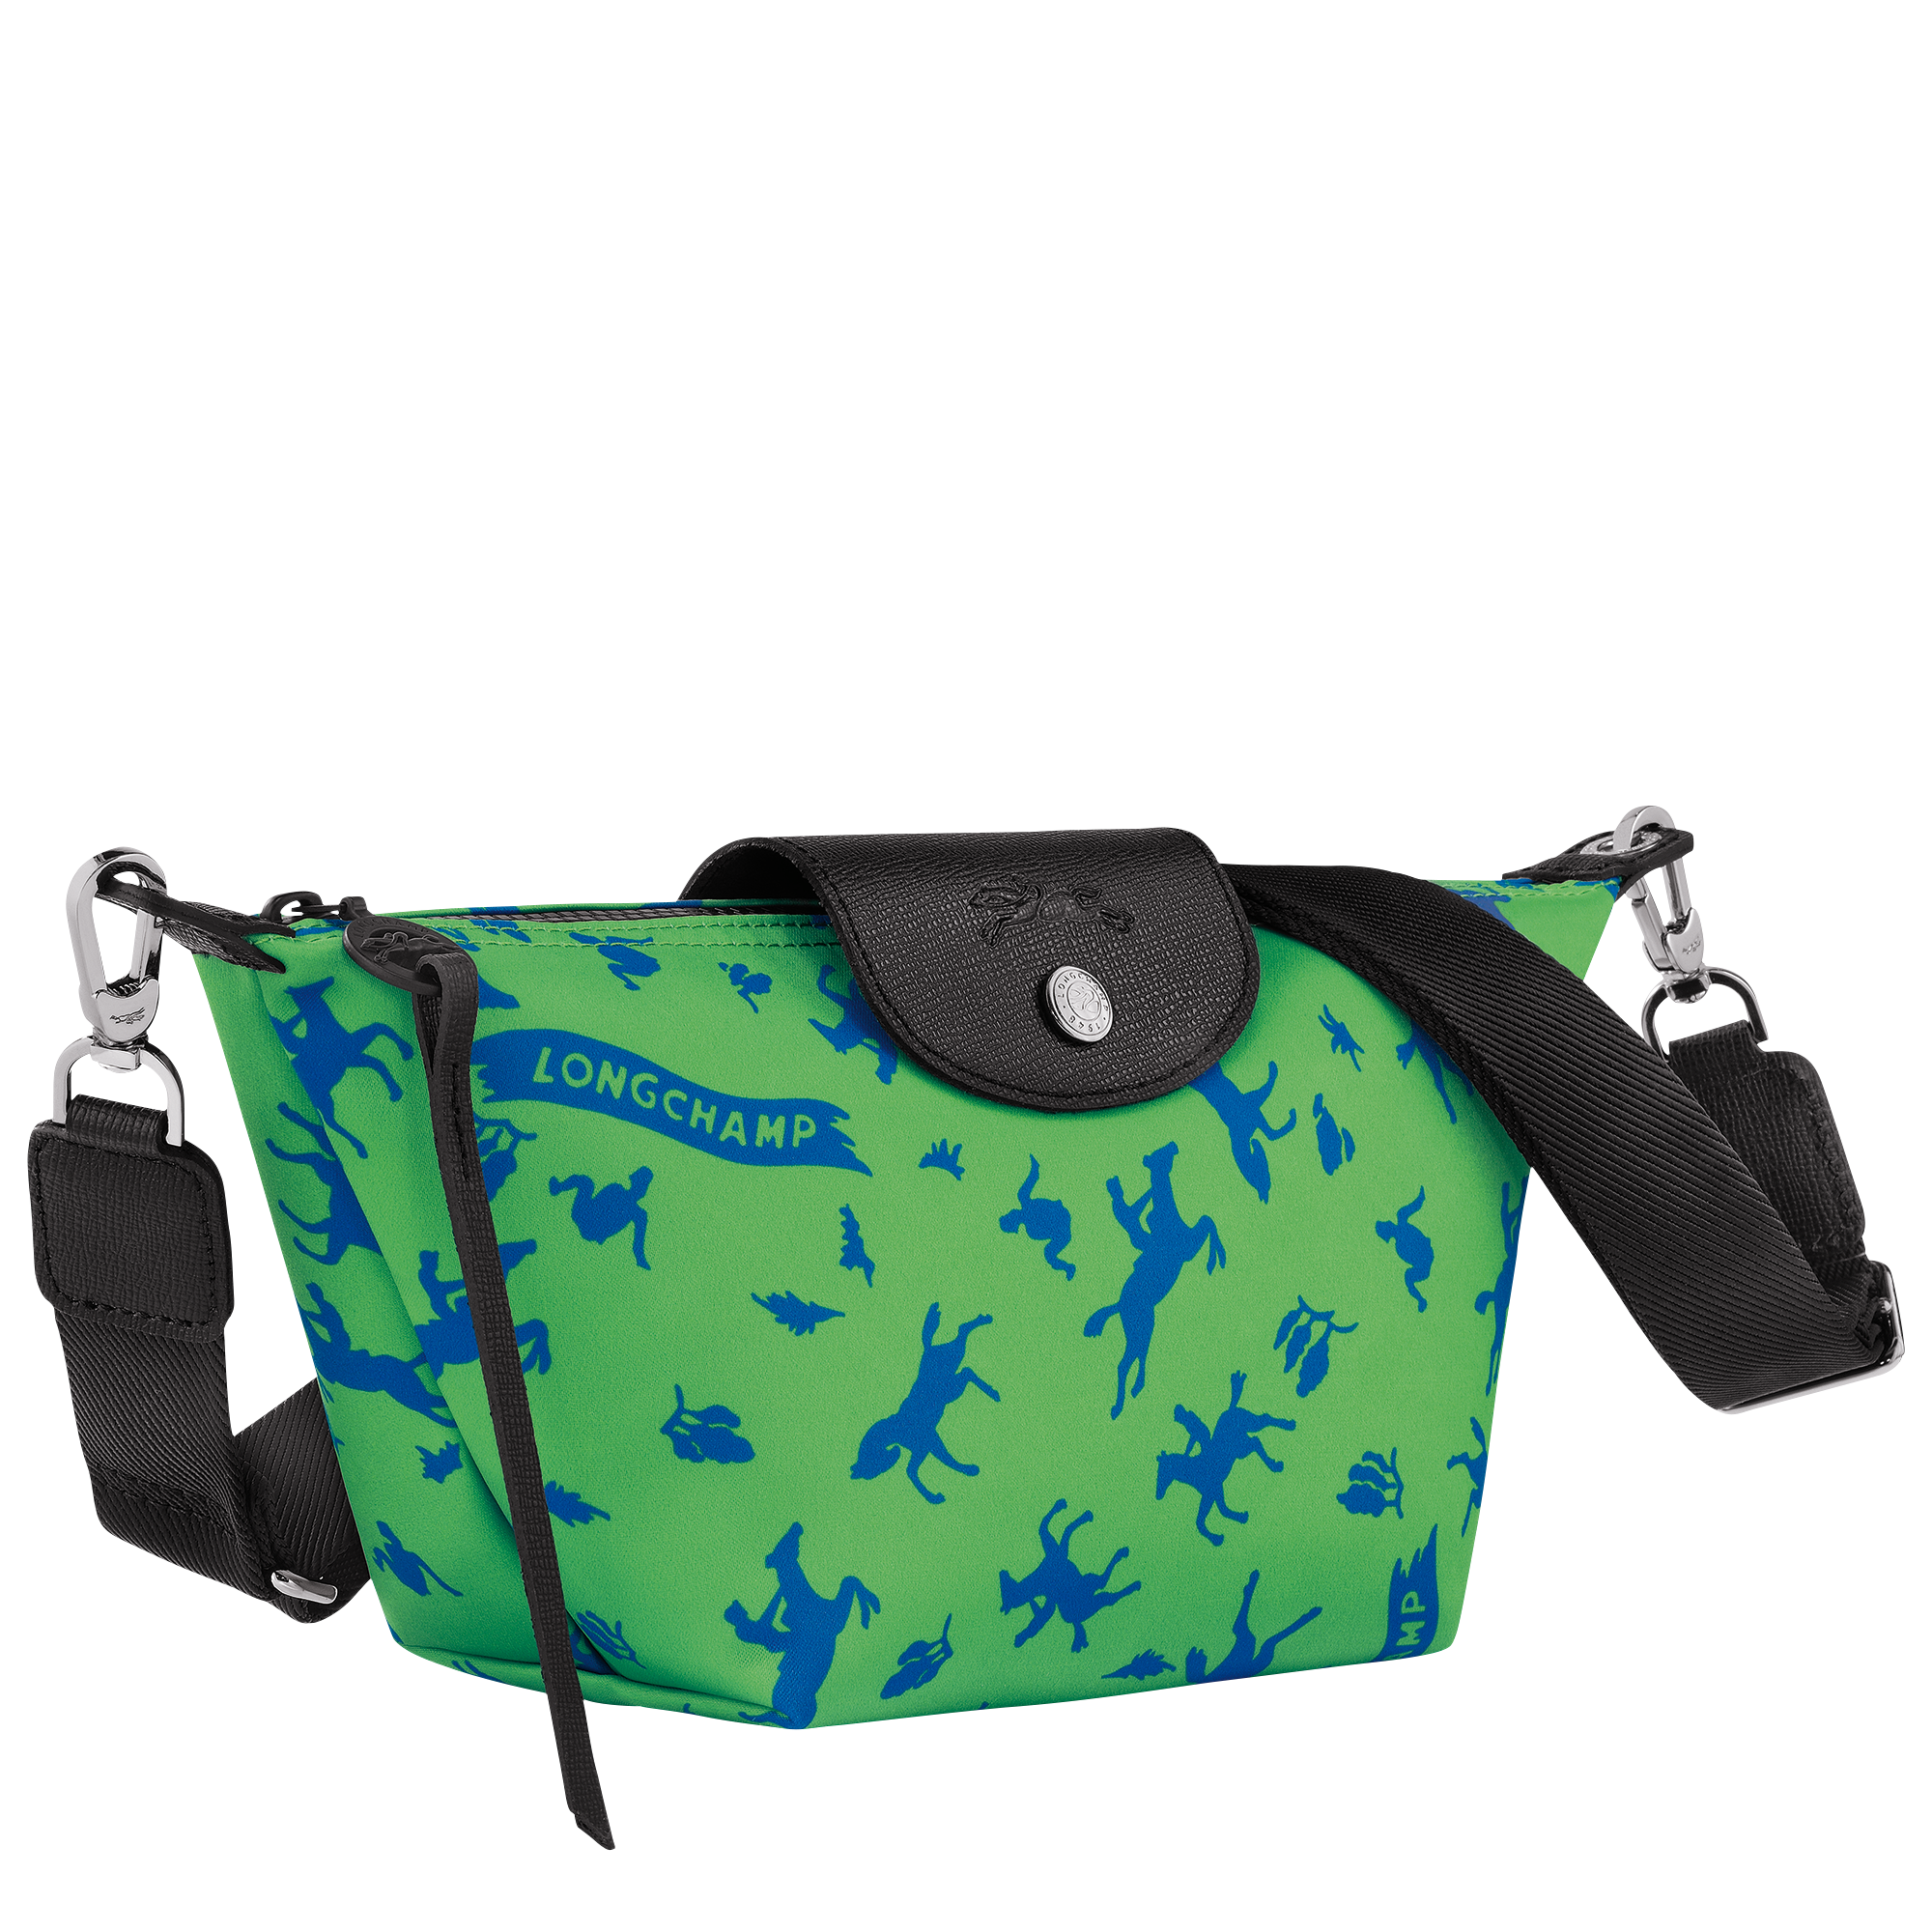 Le Pliage Collection XS Crossbody bag Lawn - Canvas (10212HDE531)